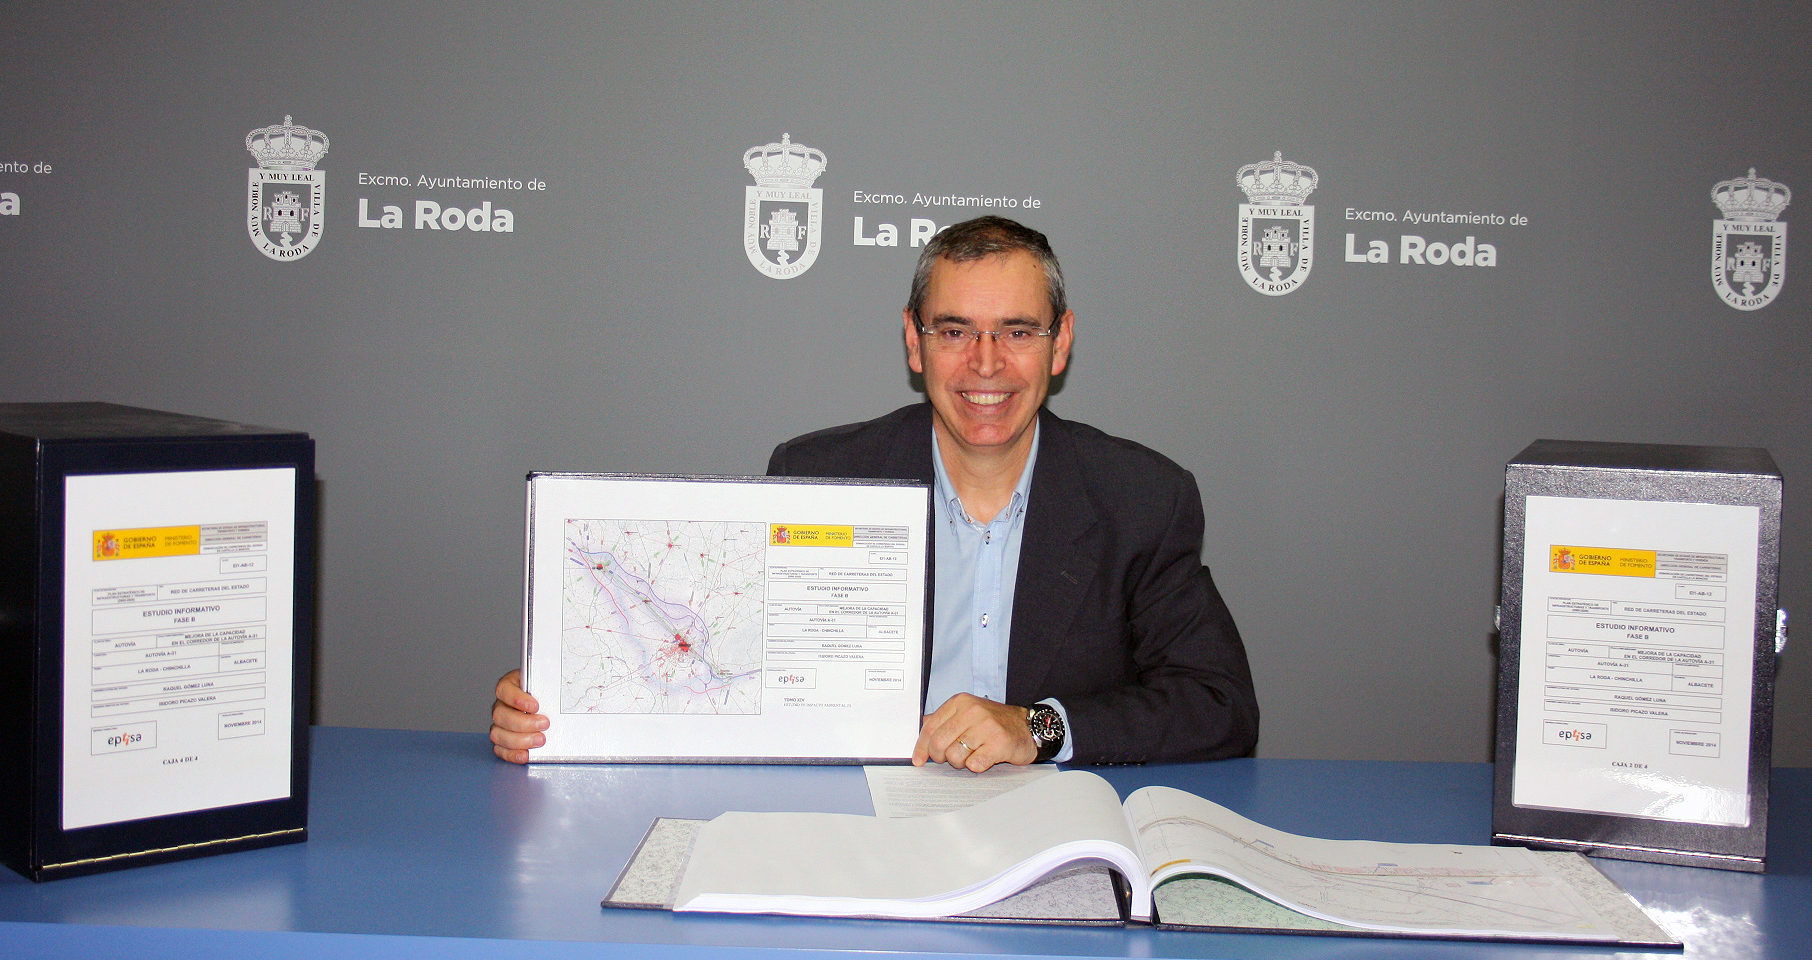 Rp.alcalde Abril 2015 Presentac. EIA En La Roda